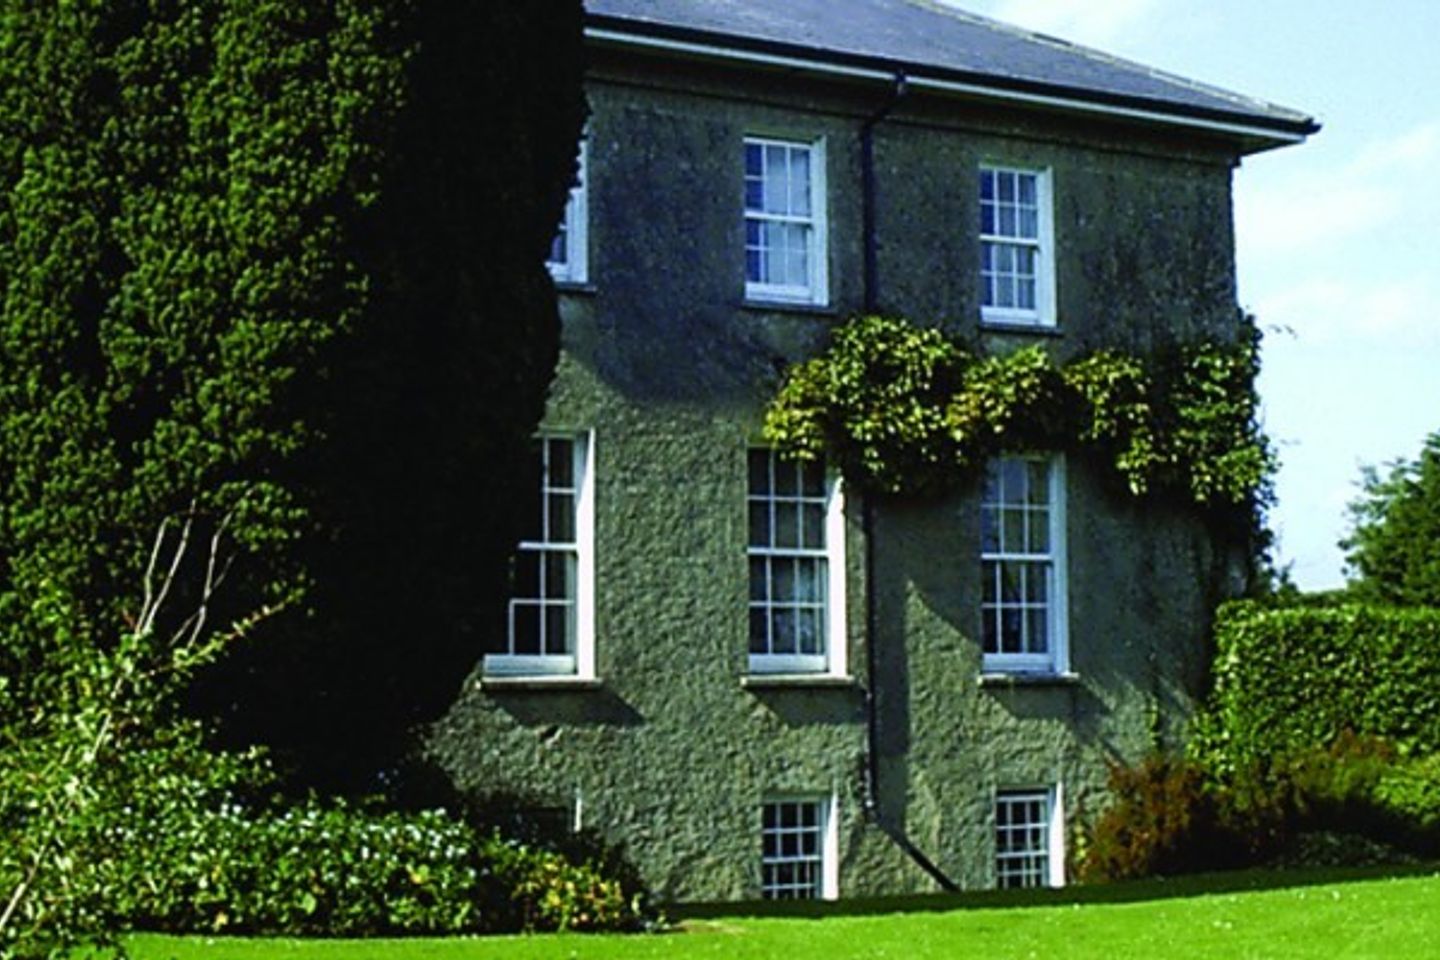 Glebe Country House, Ballinadee, Bandon, Co. Cork